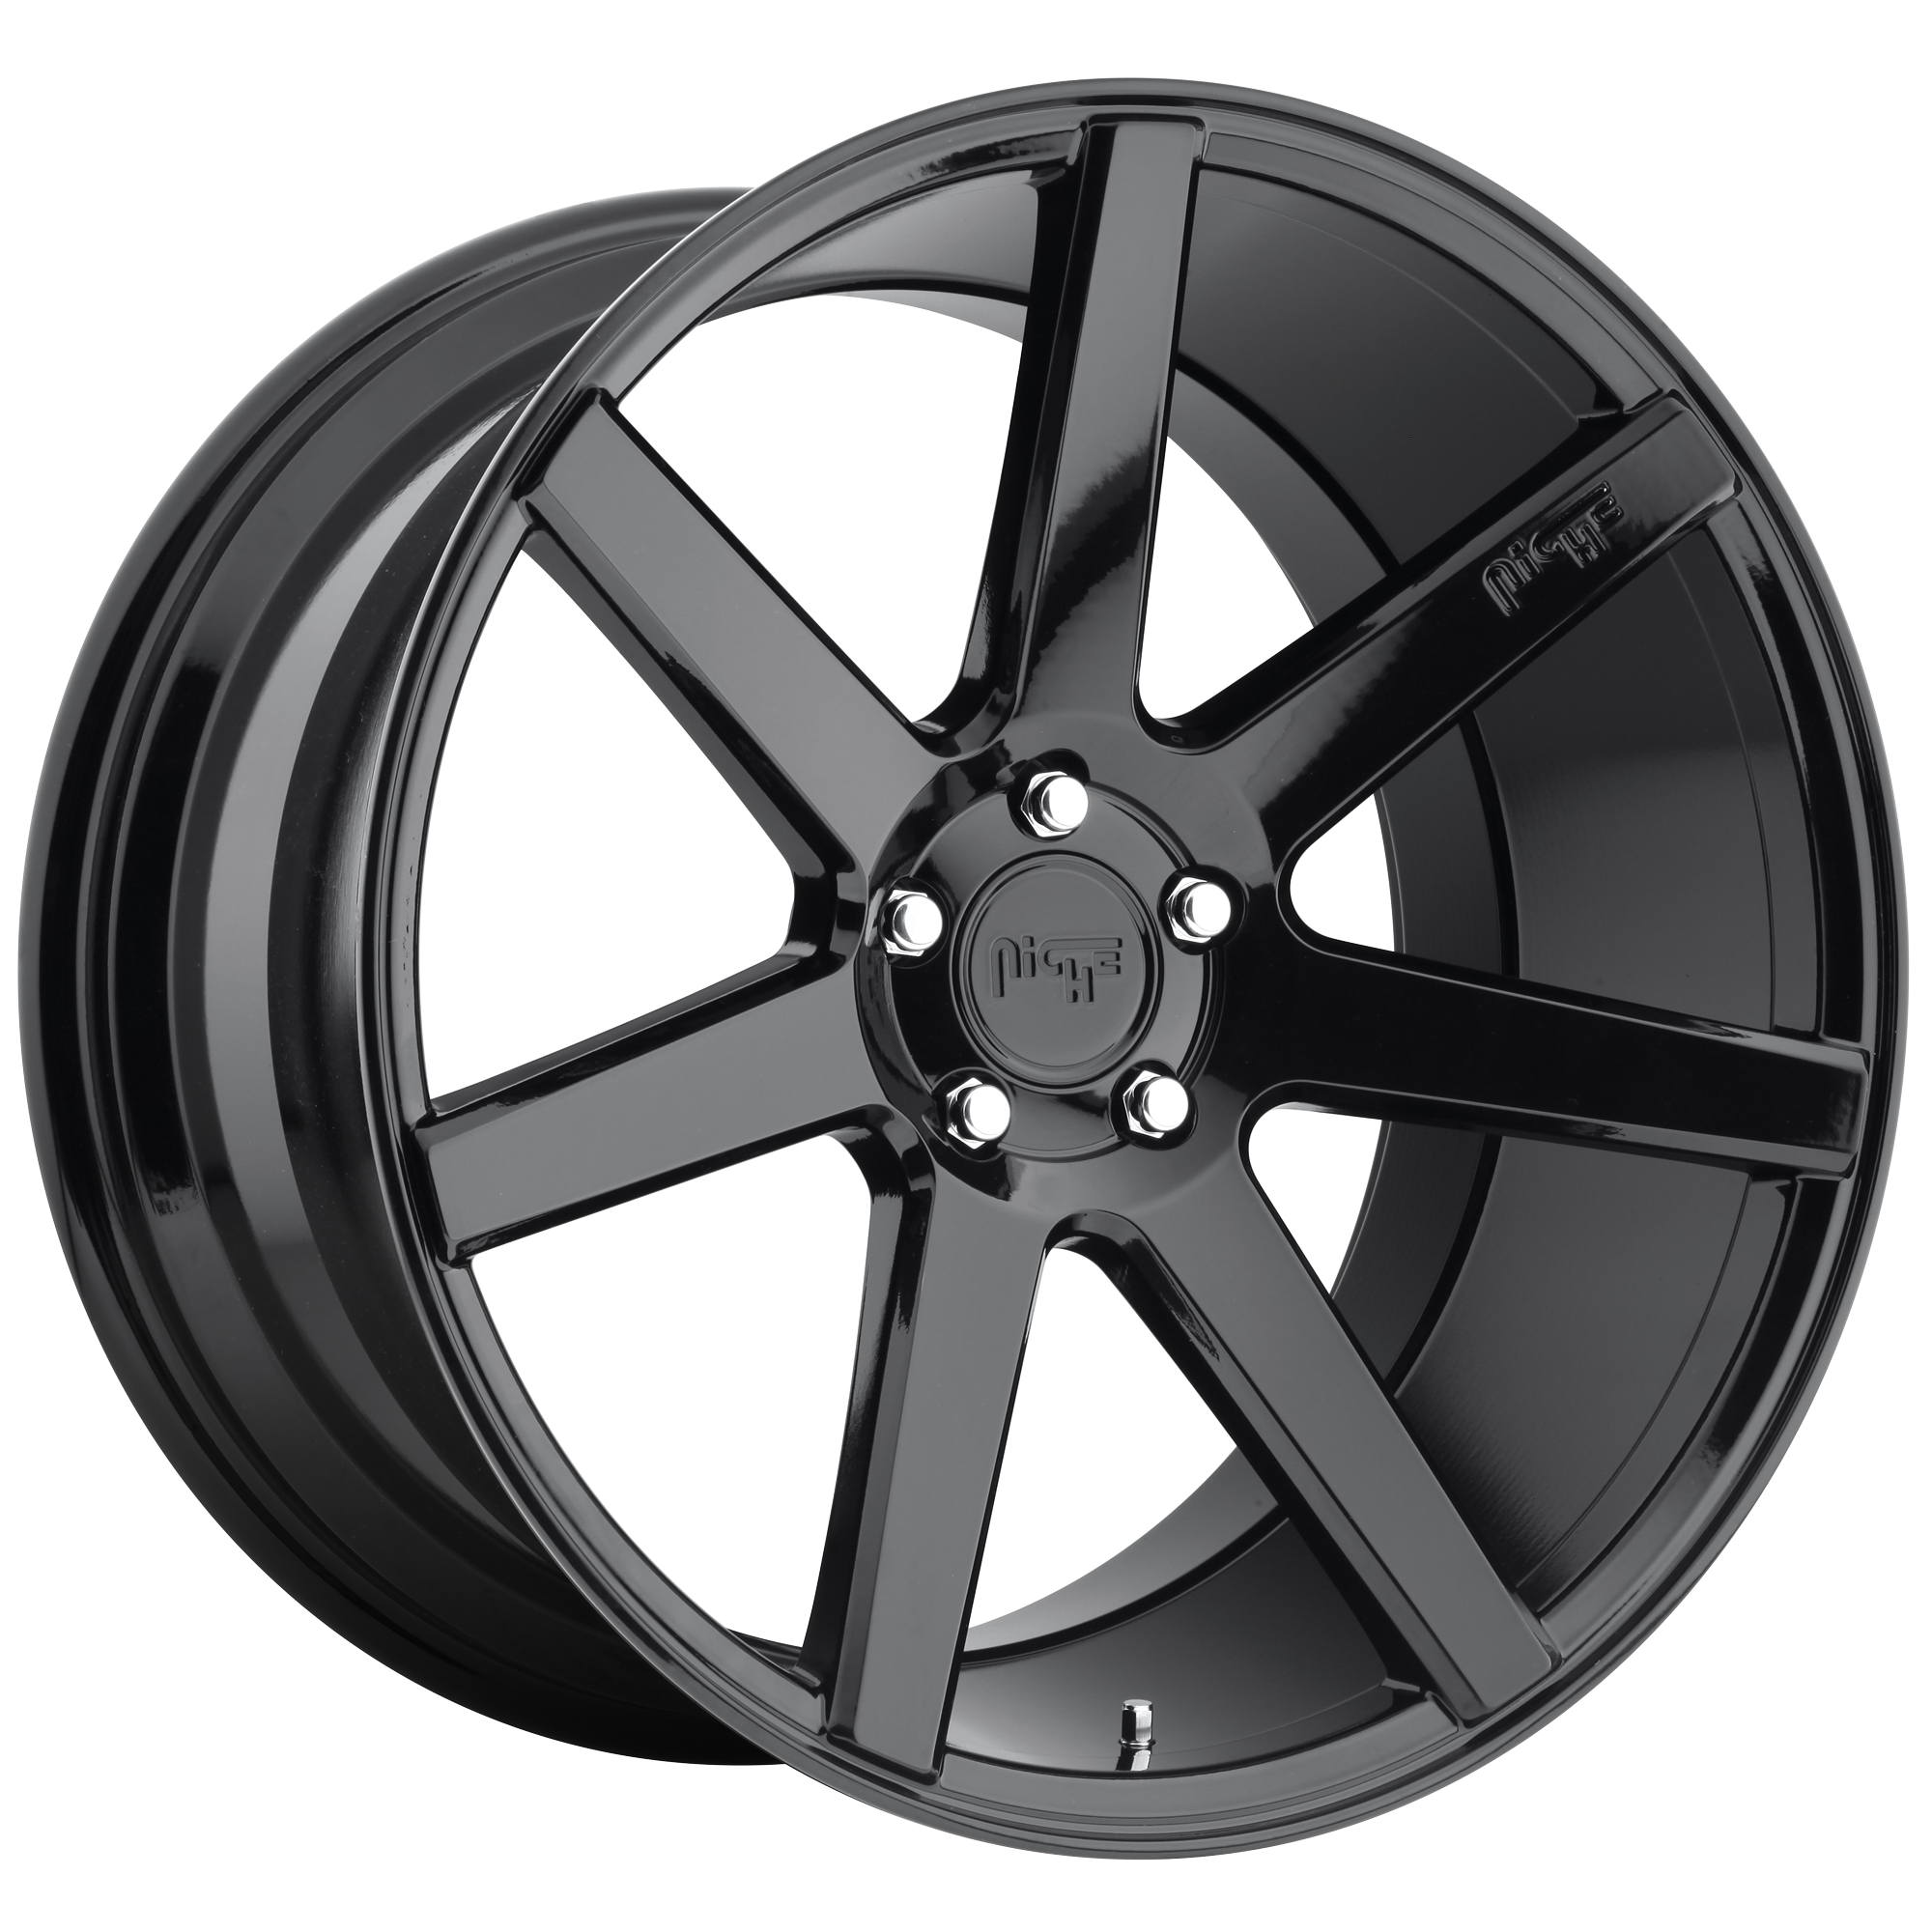 VERONA 18x8 5x114.30 GLOSS BLACK (40 mm) - Tires and Engine Performance